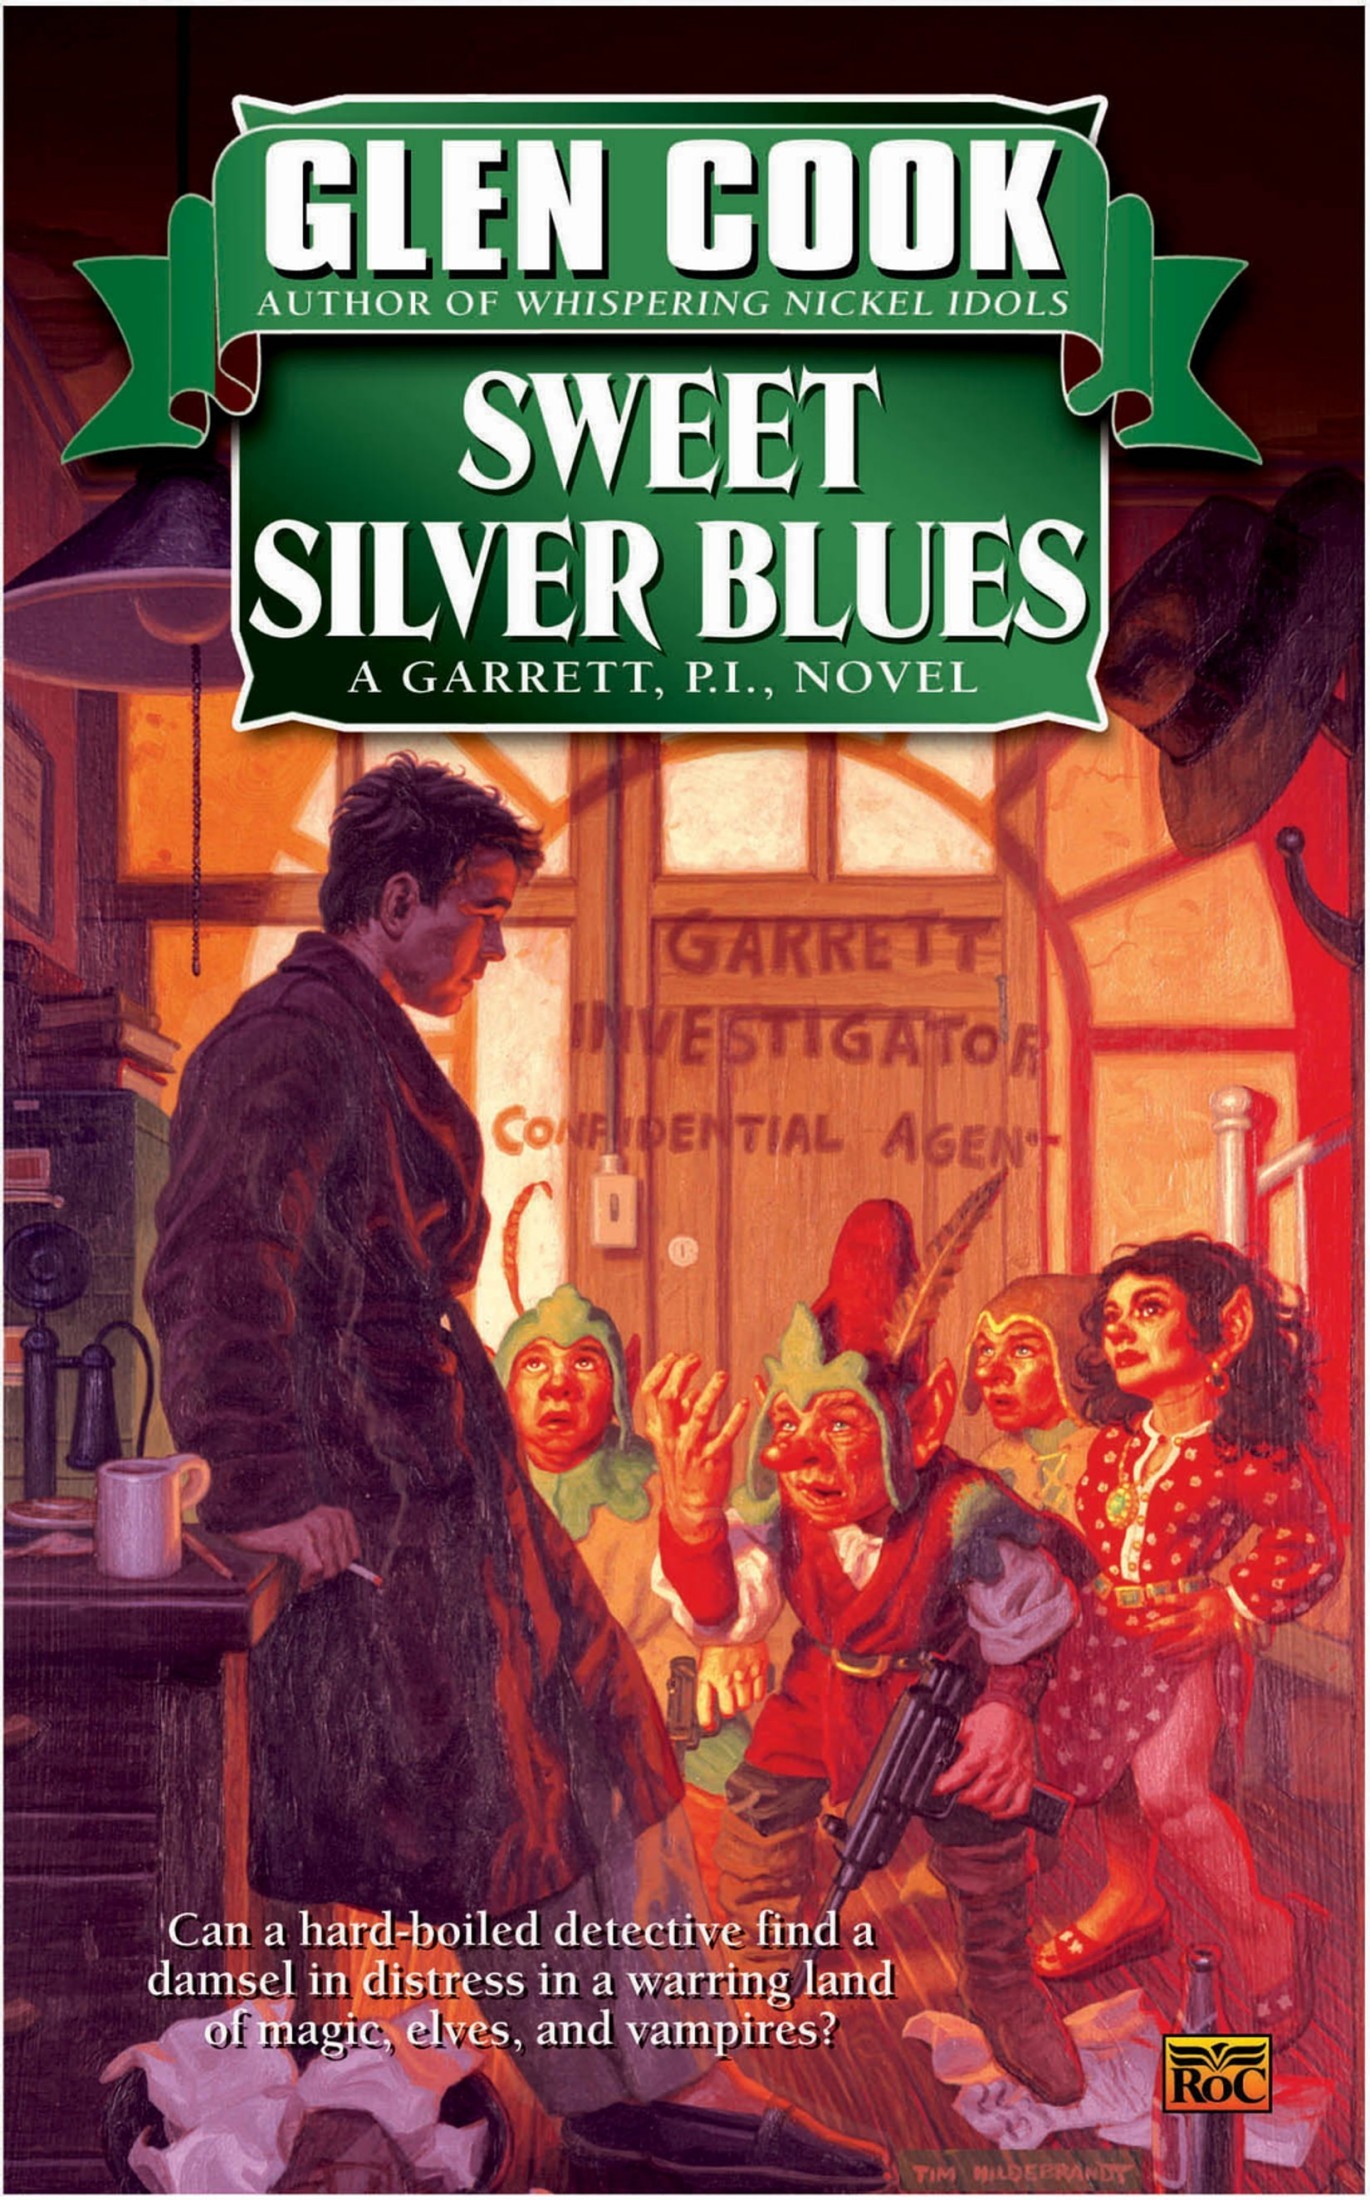 Glen Cook: Sweet Silver Blues (Garrett Files) (1990, Roc)